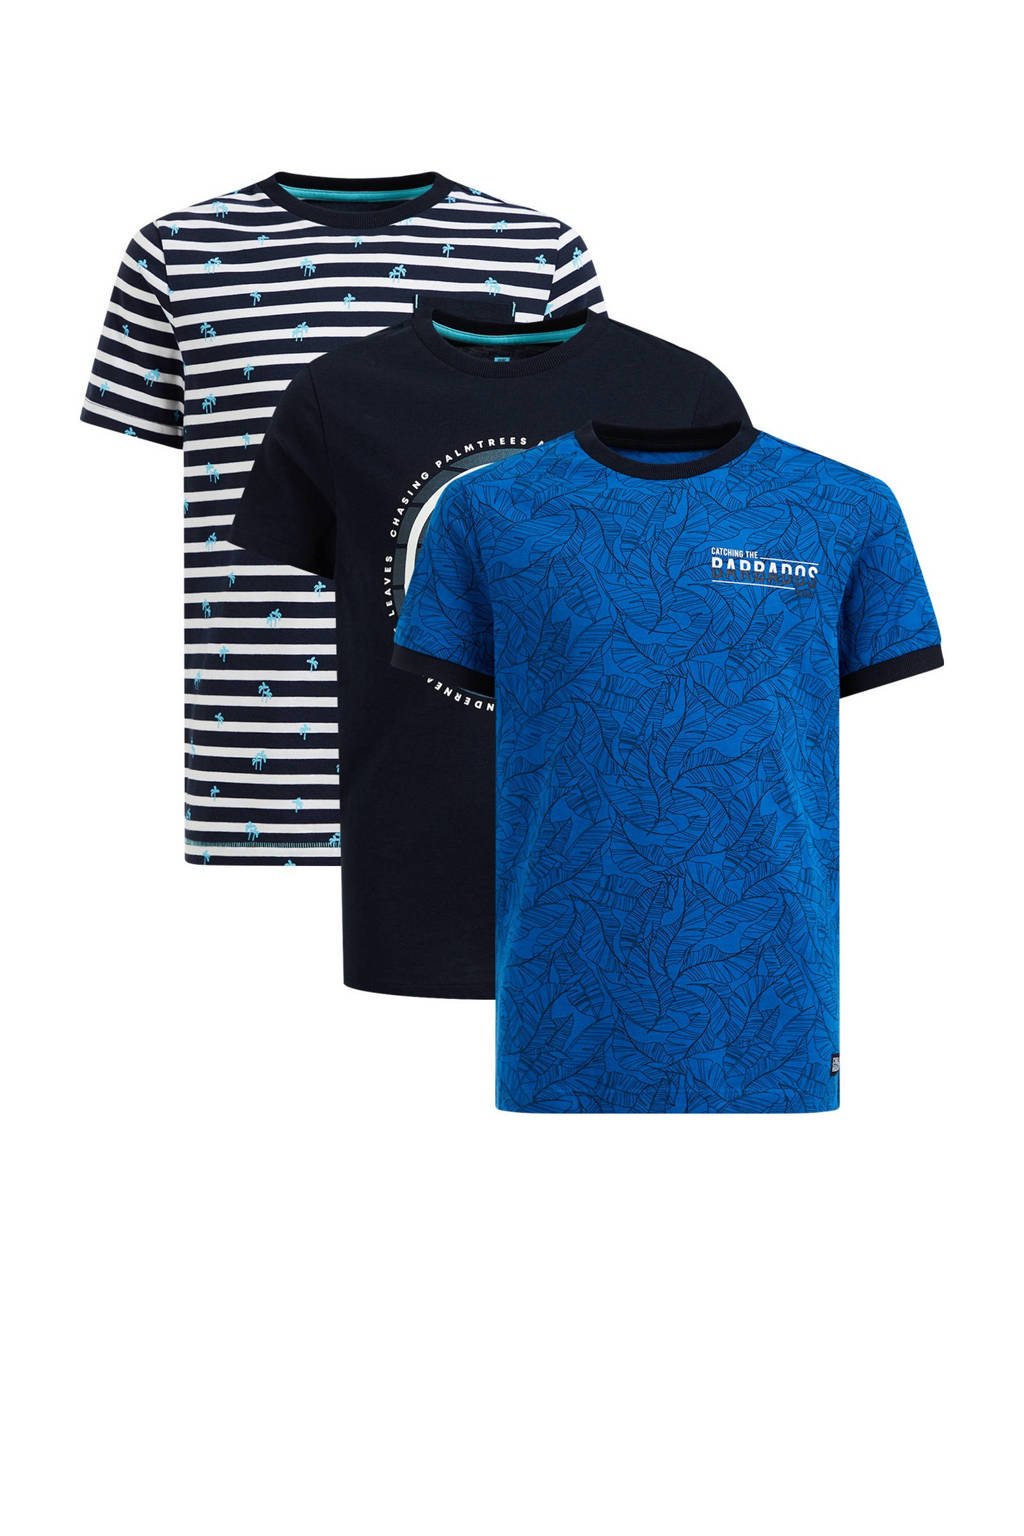 WE Fashion T-shirt - set van 3 blauw/zwart/donkerblauw